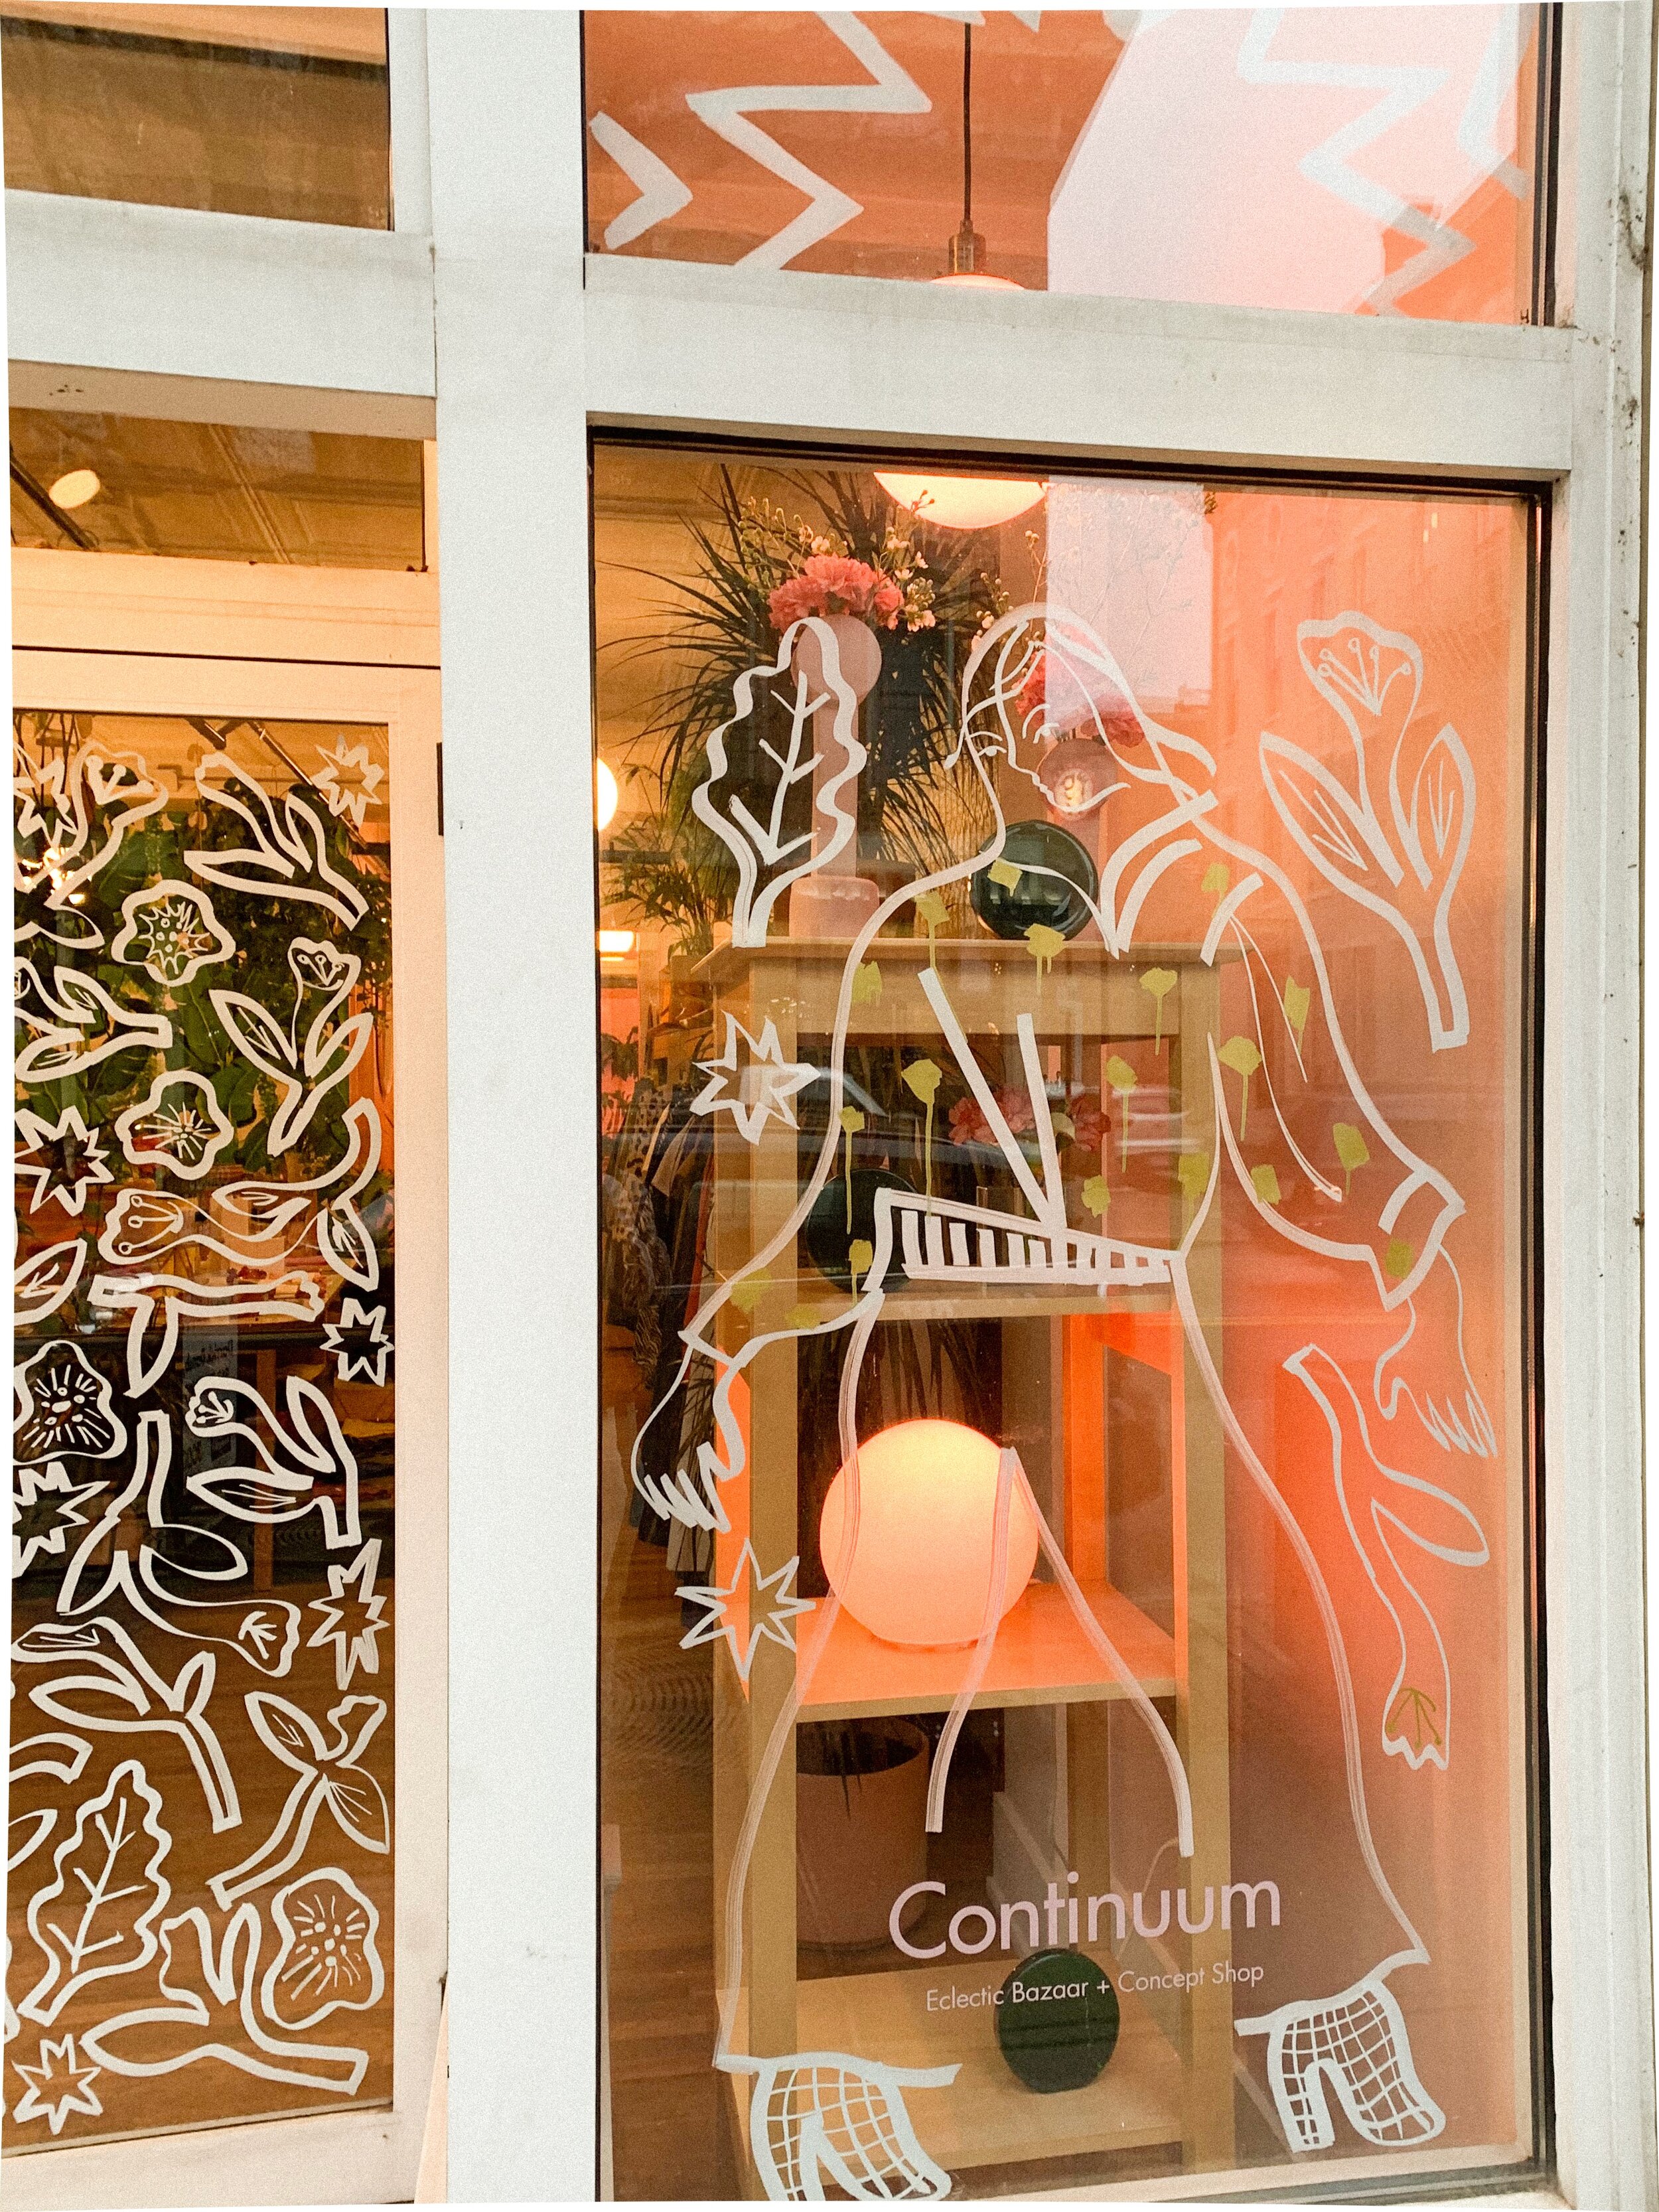  Window display for Continuum Bazaar in Cincinnati’s Over-the-Rhine neighborhood 